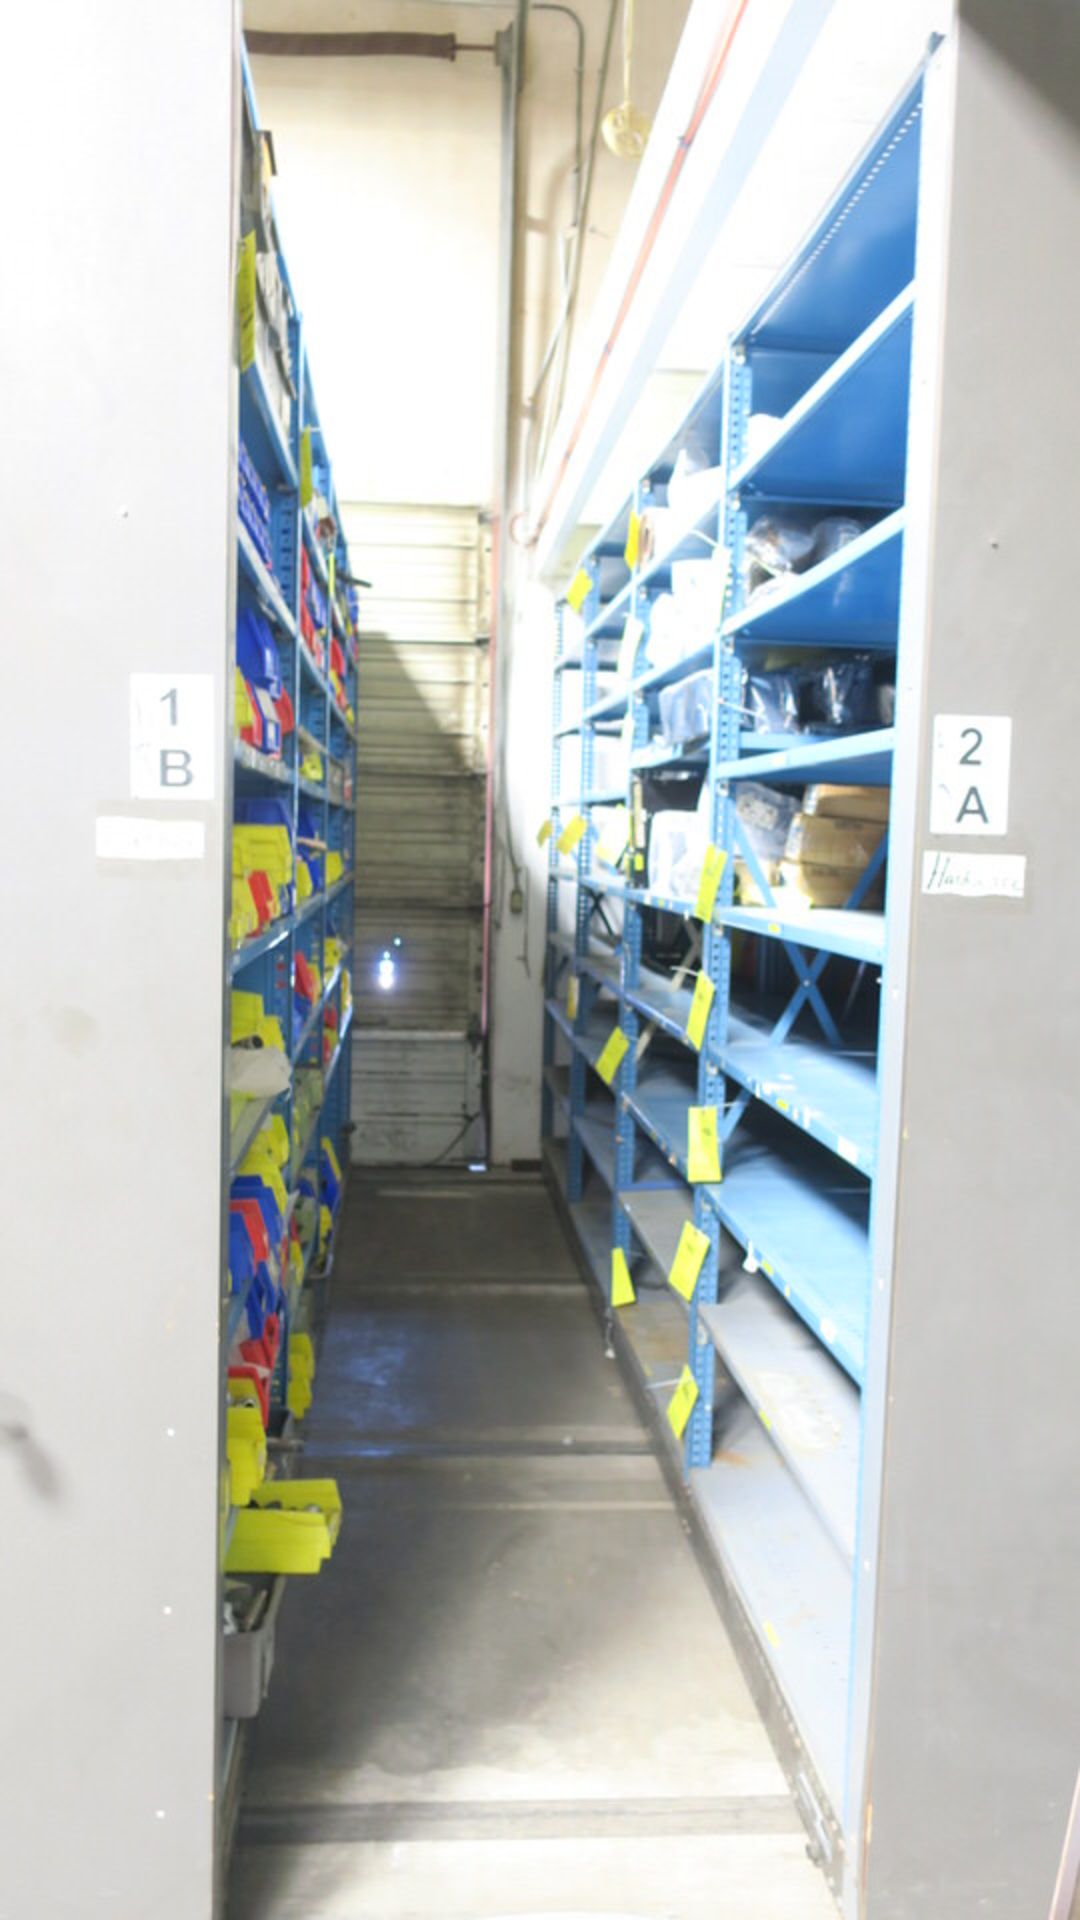 Large rolling rack storage system - Image 2 of 3